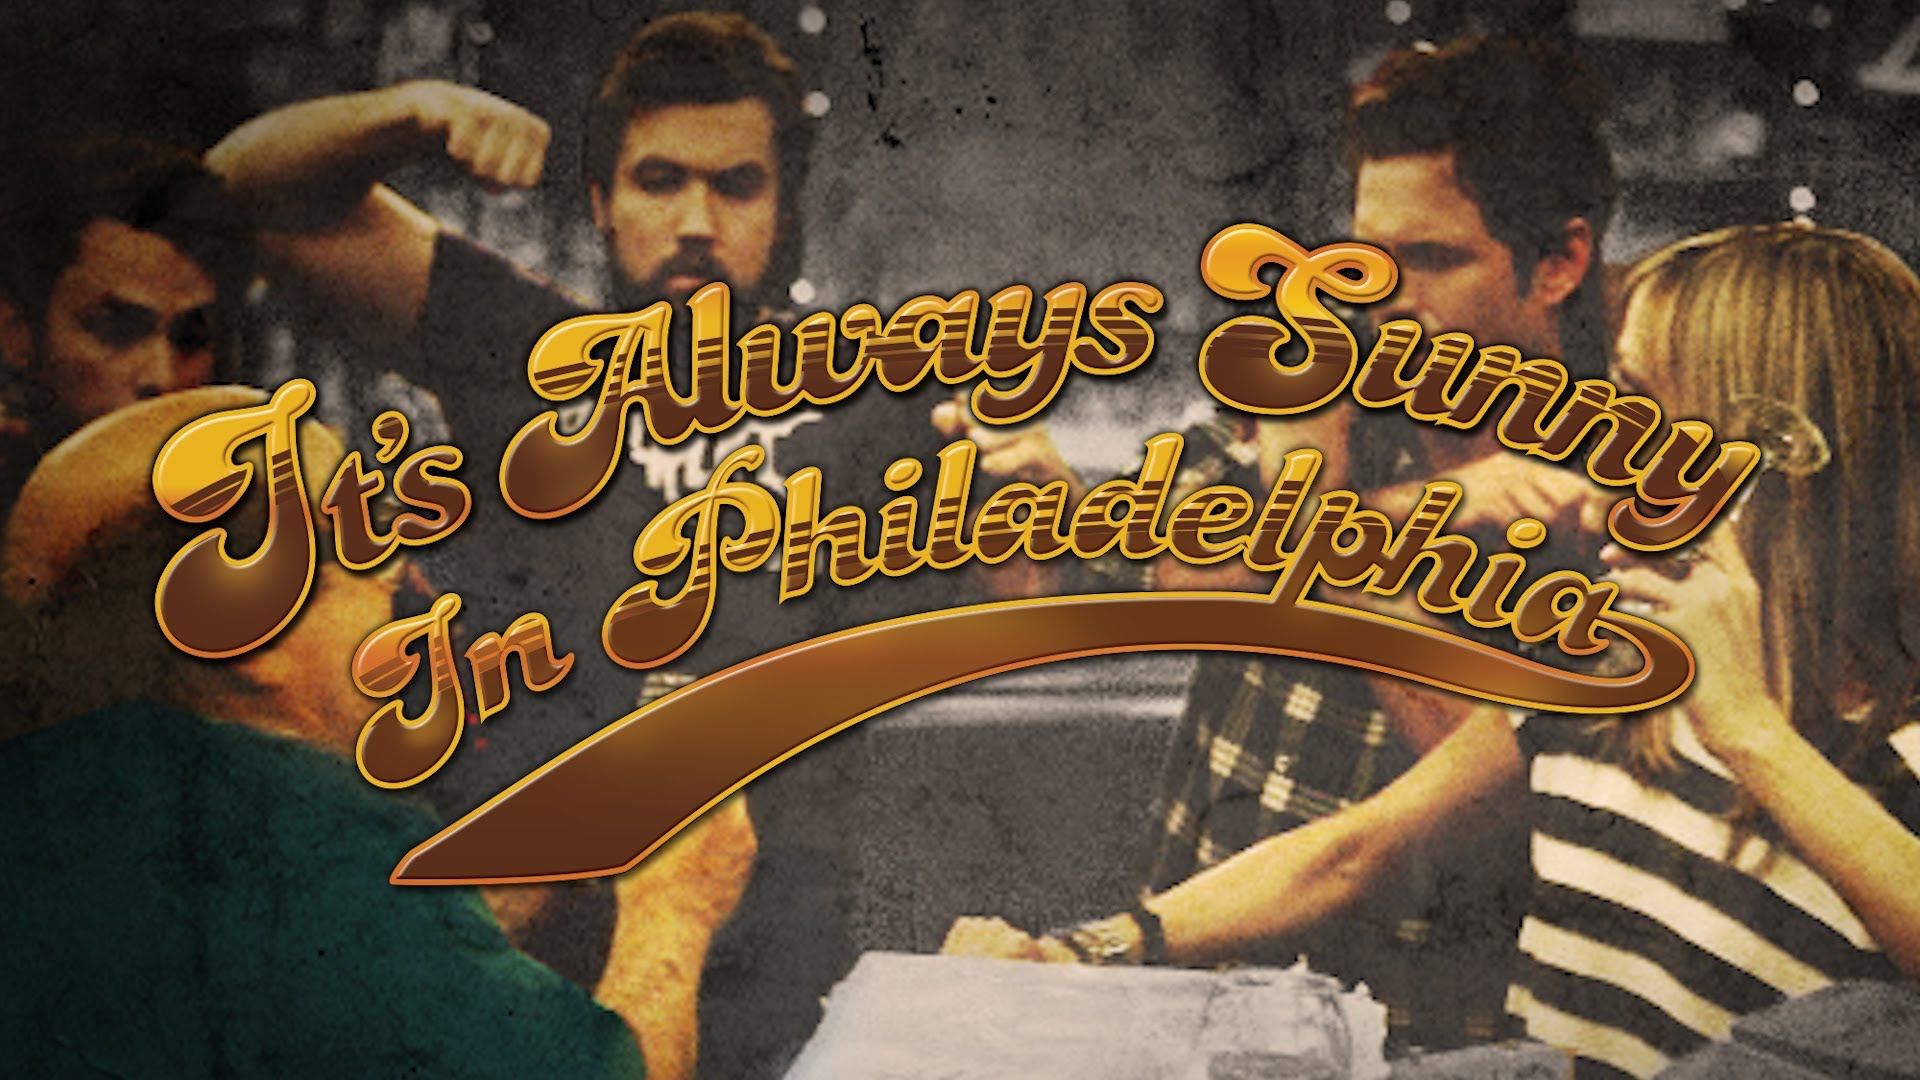 It's Always Sunny in Philadelphia: Cheers Opening - YouTube